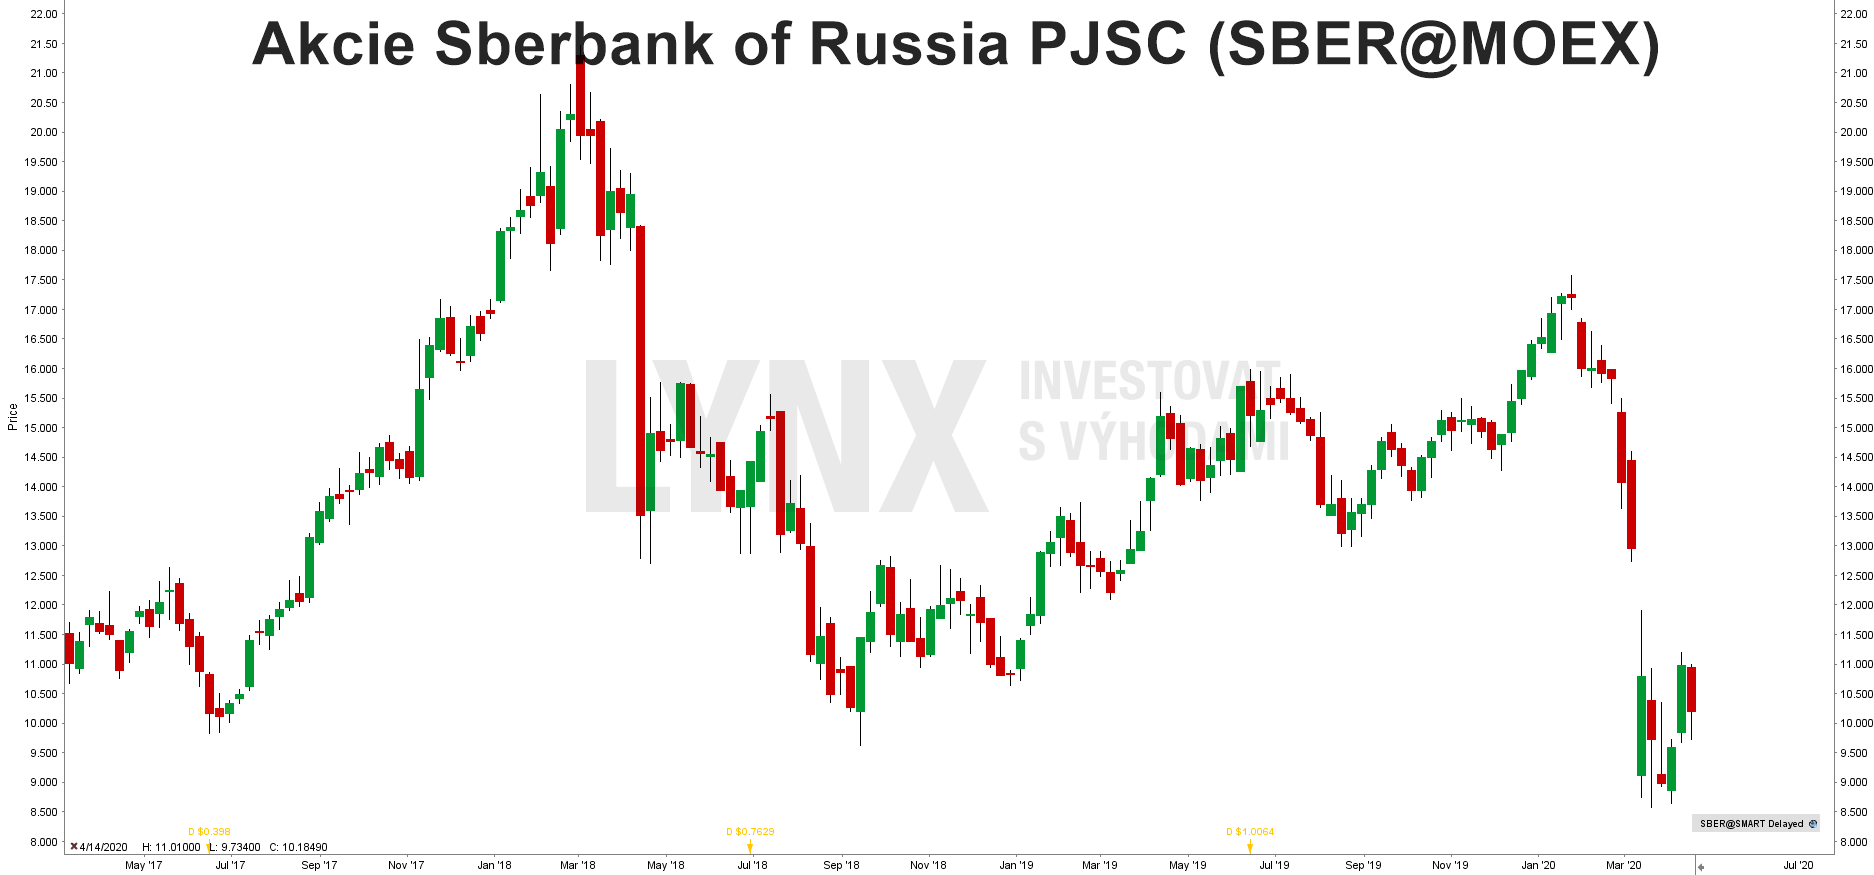 Graf akcie Sberbank (SBER)